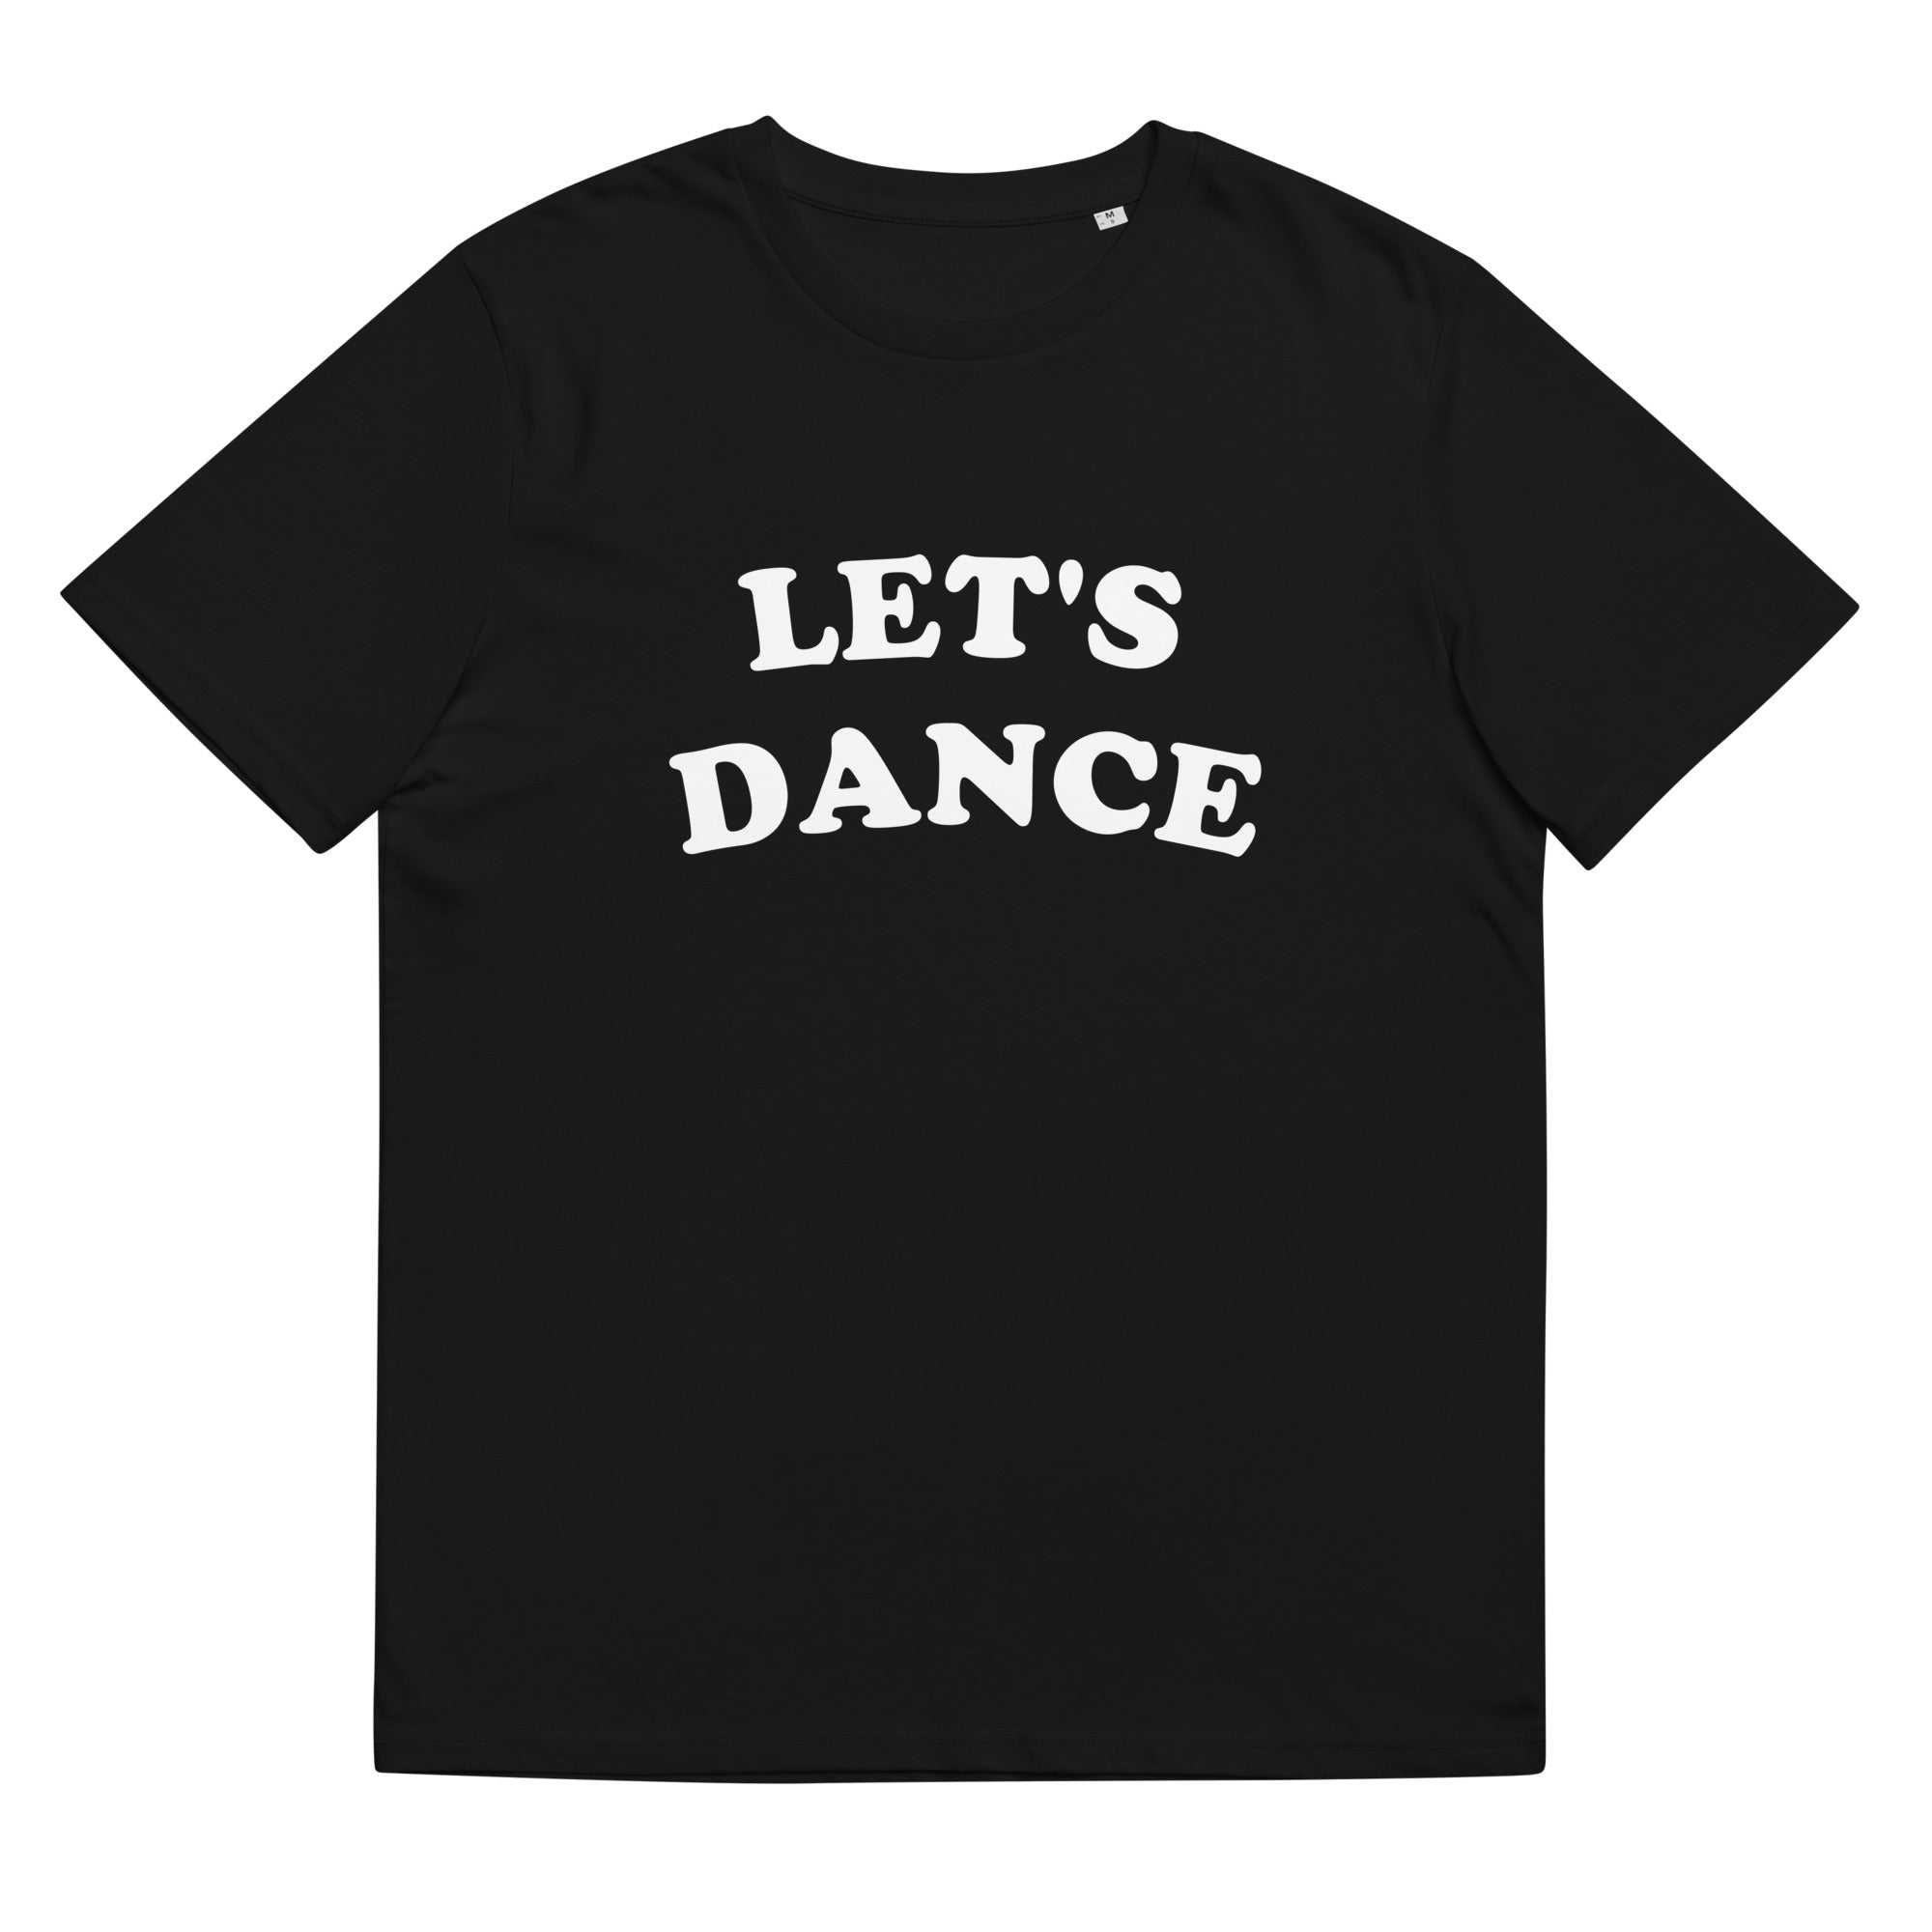 LET'S DANCE Printed Unisex organic Cotton T-shirt